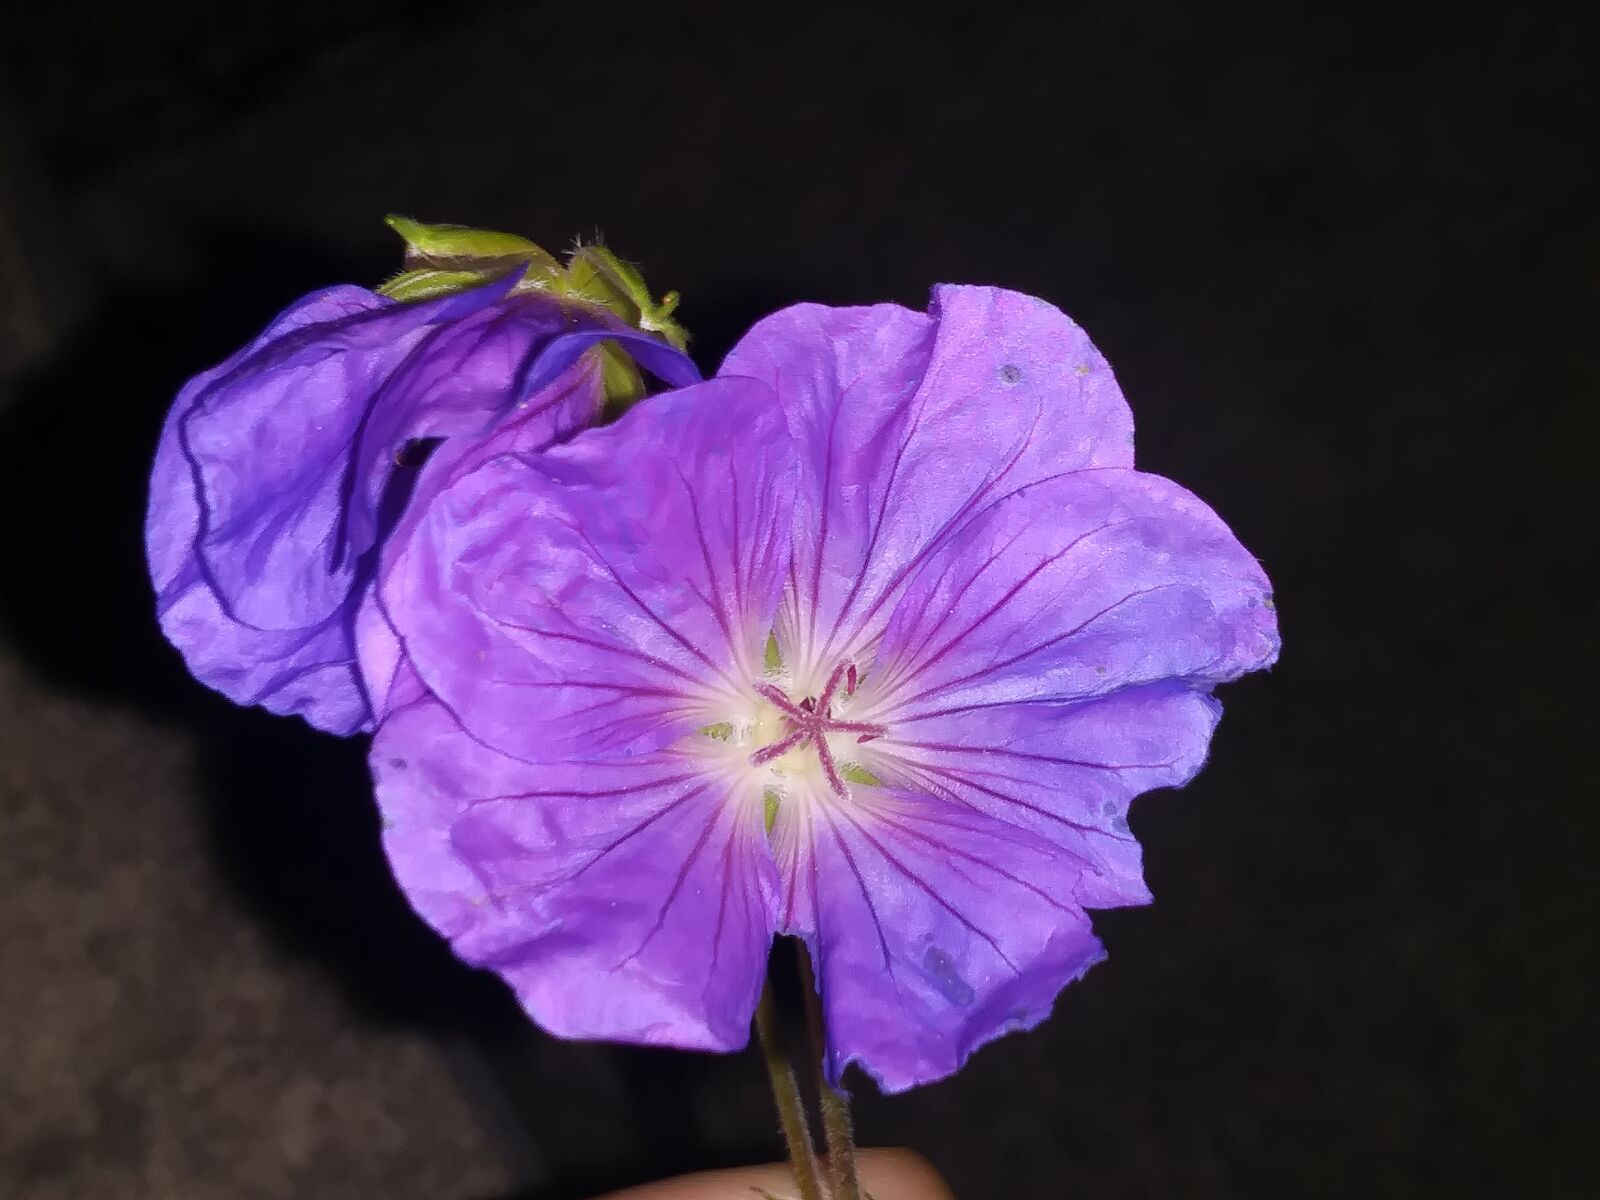 LG ARISTO sample photo. Flower, purple photography